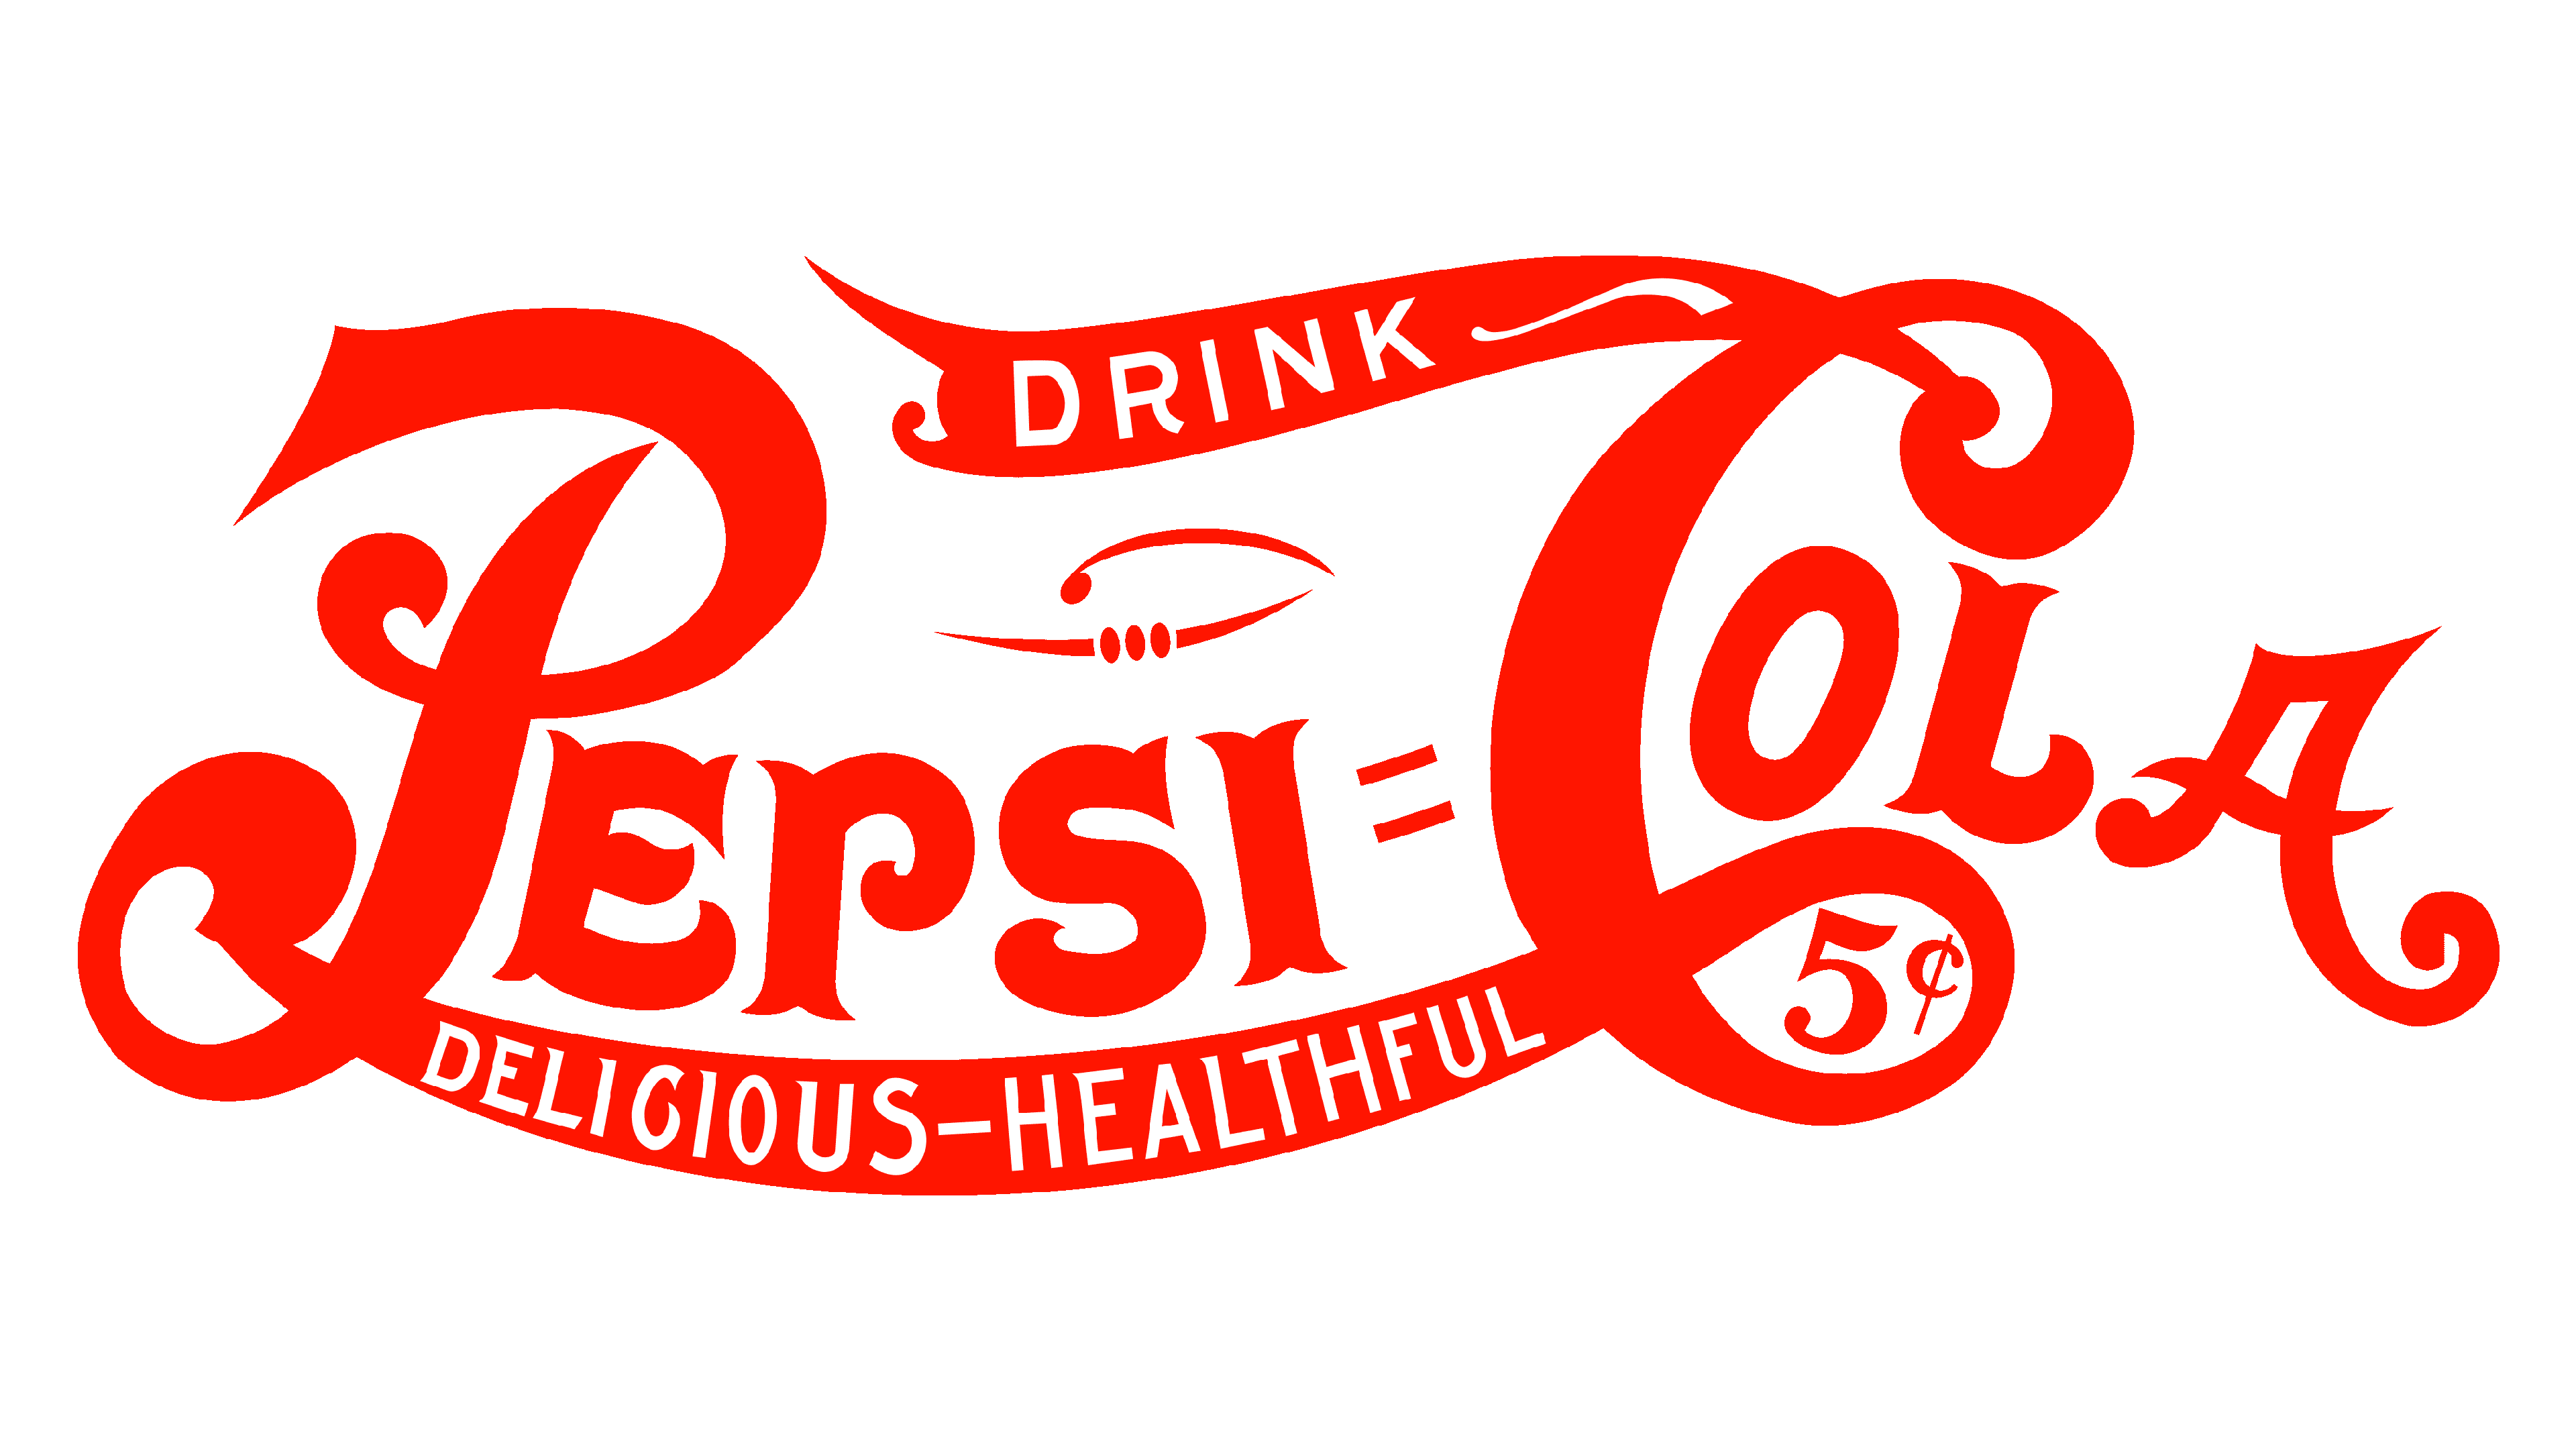 Pepsi Logo 1962